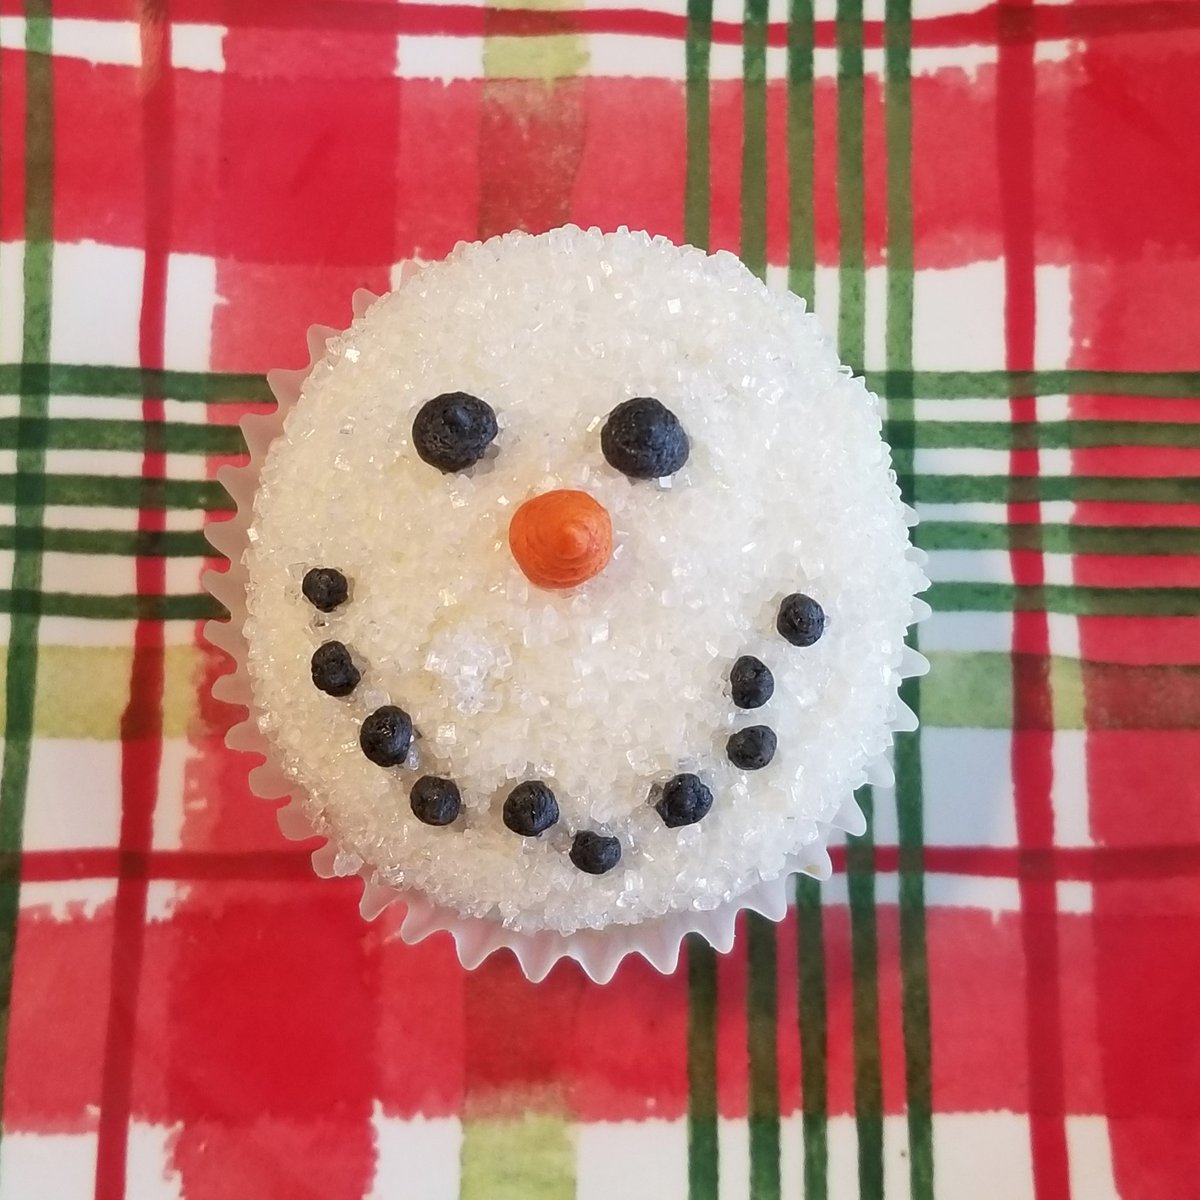 On the 10th of December, Flour Child created for me sparkling snowman smiles 🧁

flourchildcreations.com/25-days-of-cre…

#CAKEBUS #FlourChildCreations #topthat #onlyinwanamingo #mnbakery  #cupcakeoftheday #cakeeveryday #indulge #madeinmn #bakingtherapy #25daysofcupcakes #snowmen #cupcake